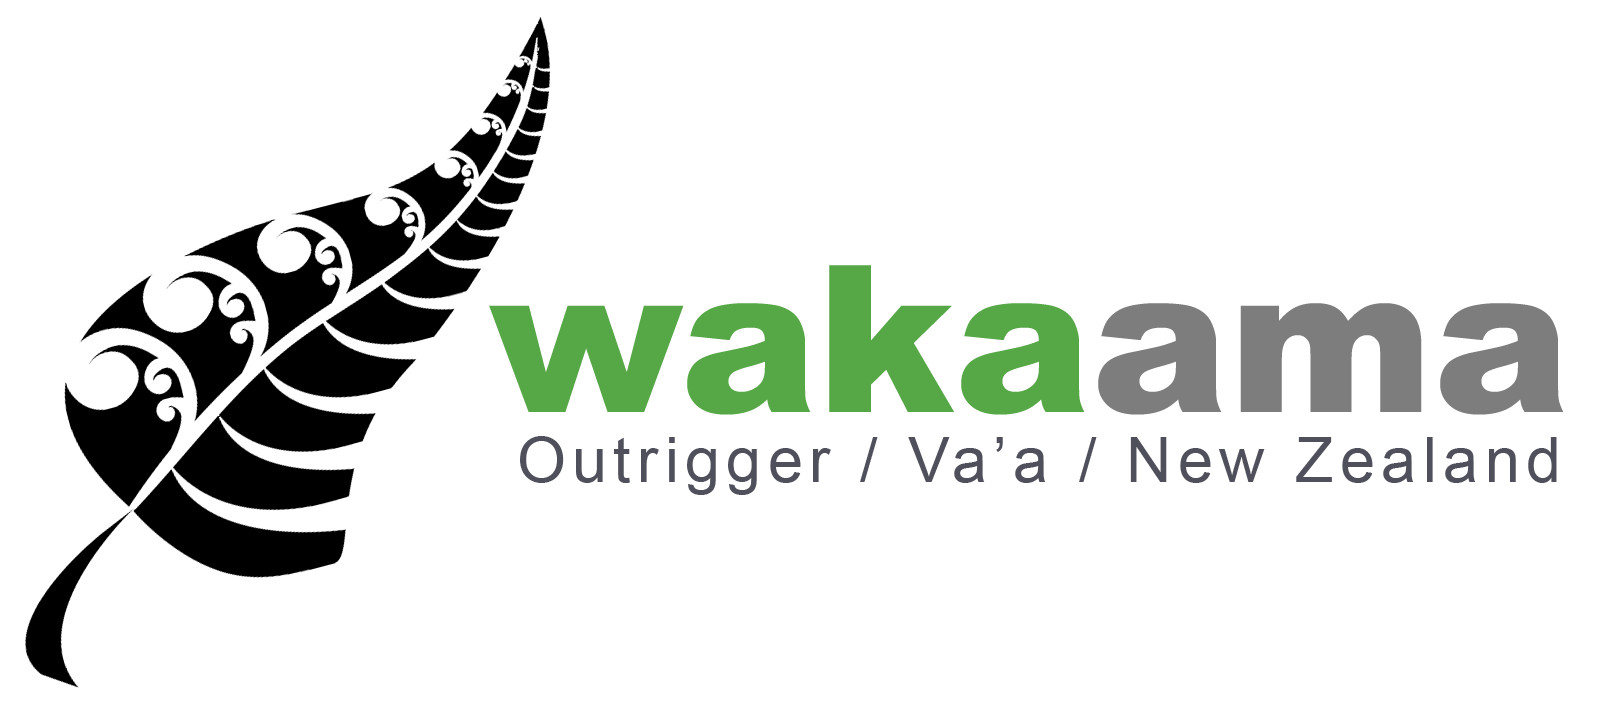 Reminder: Waka Ama New Zealand 2016 World Sprints Elite Team - Coach Applications due